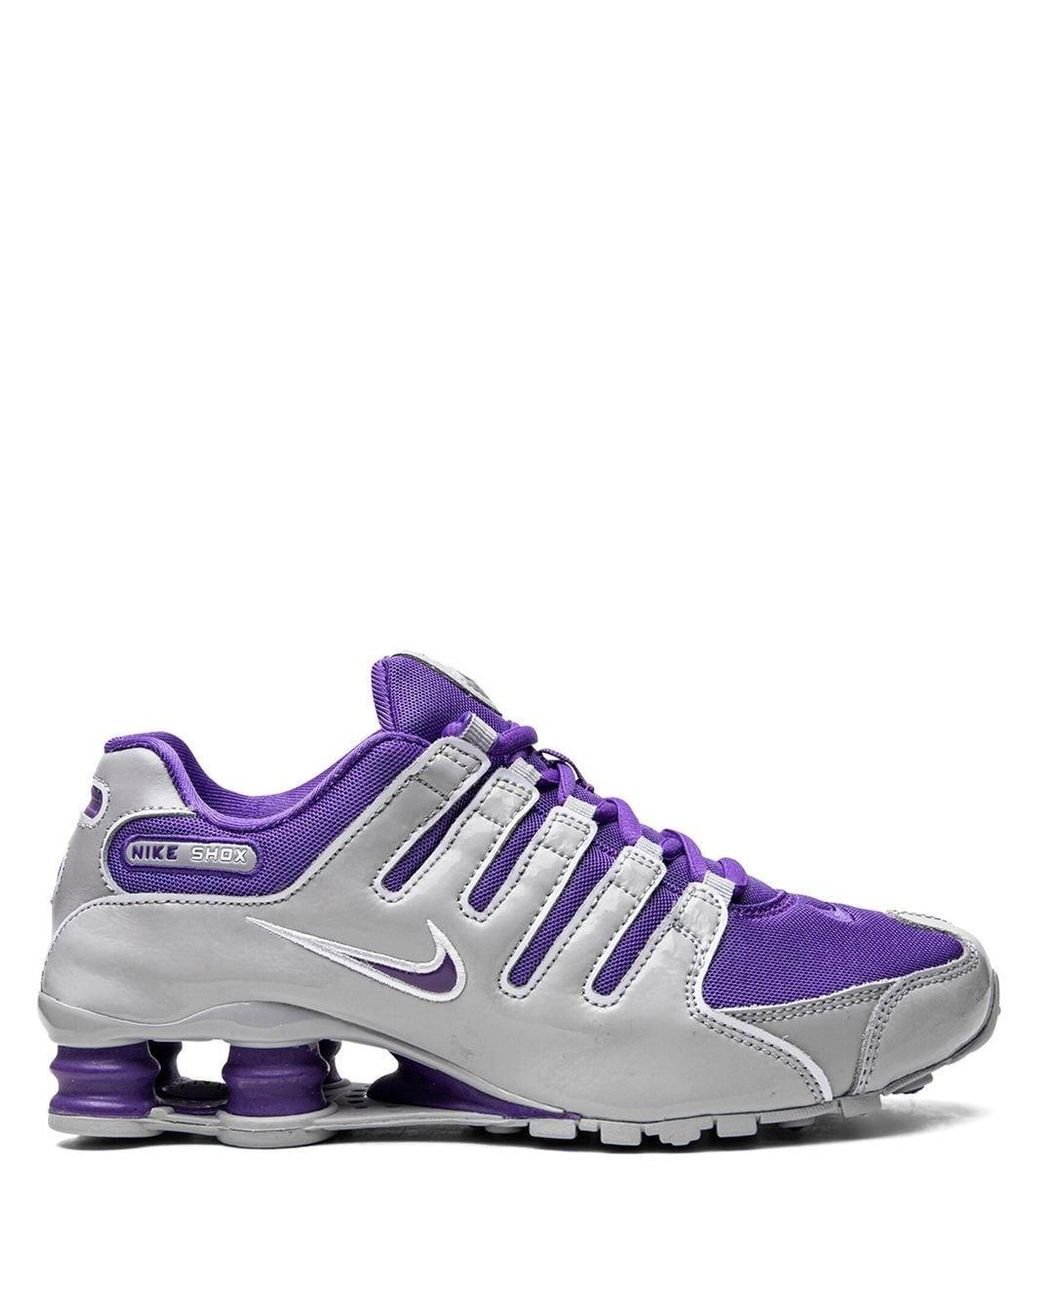 Nike Shox Nz Low-top Sneakers in Purple 